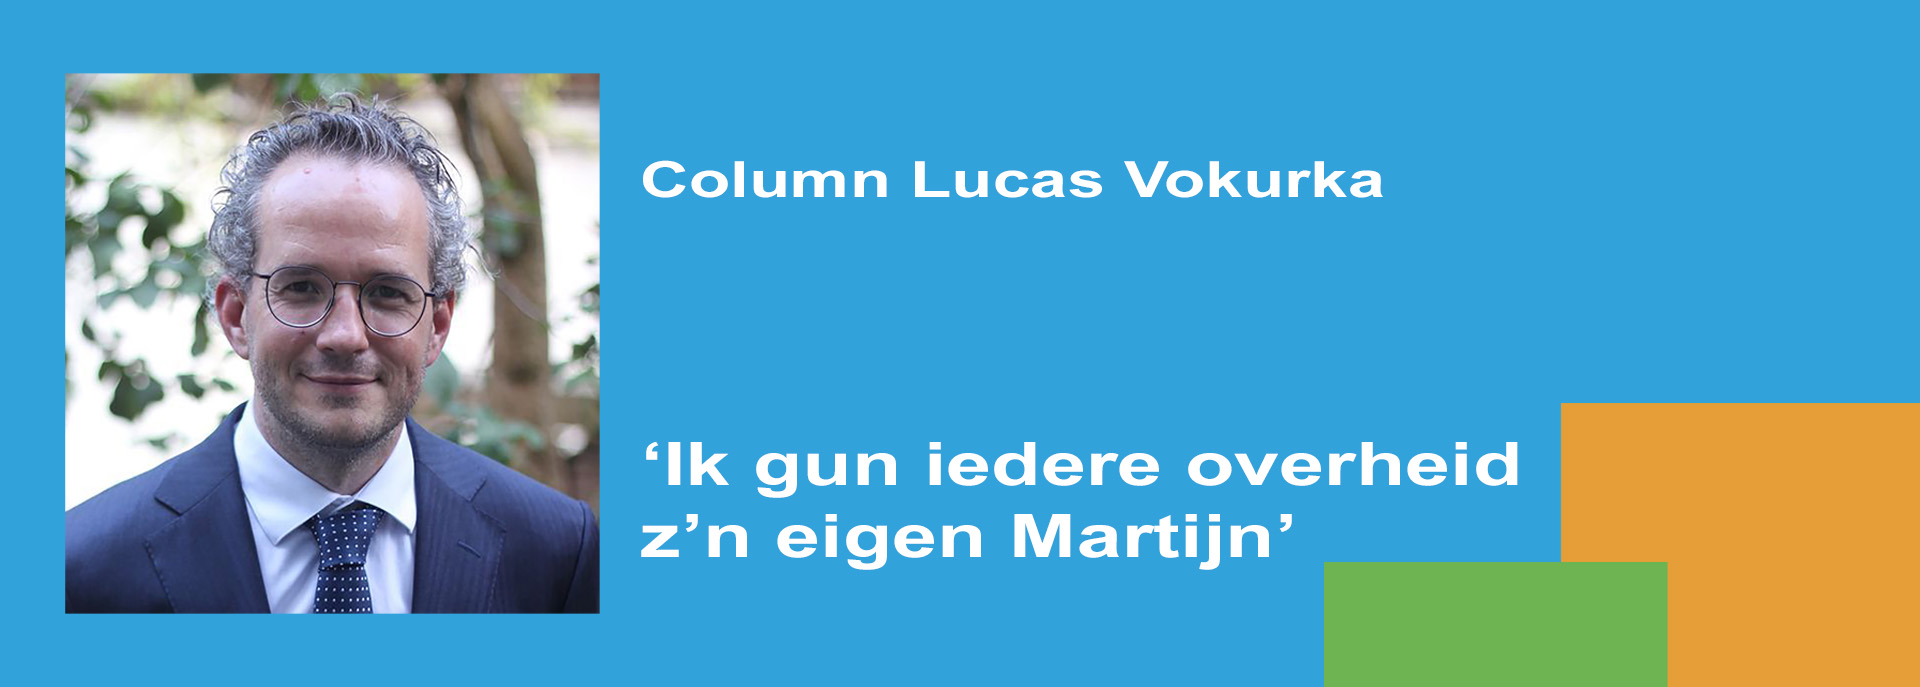 Column Lucas Vokurka: 'Ik gun iedere overheid z'n eigen Martijn'